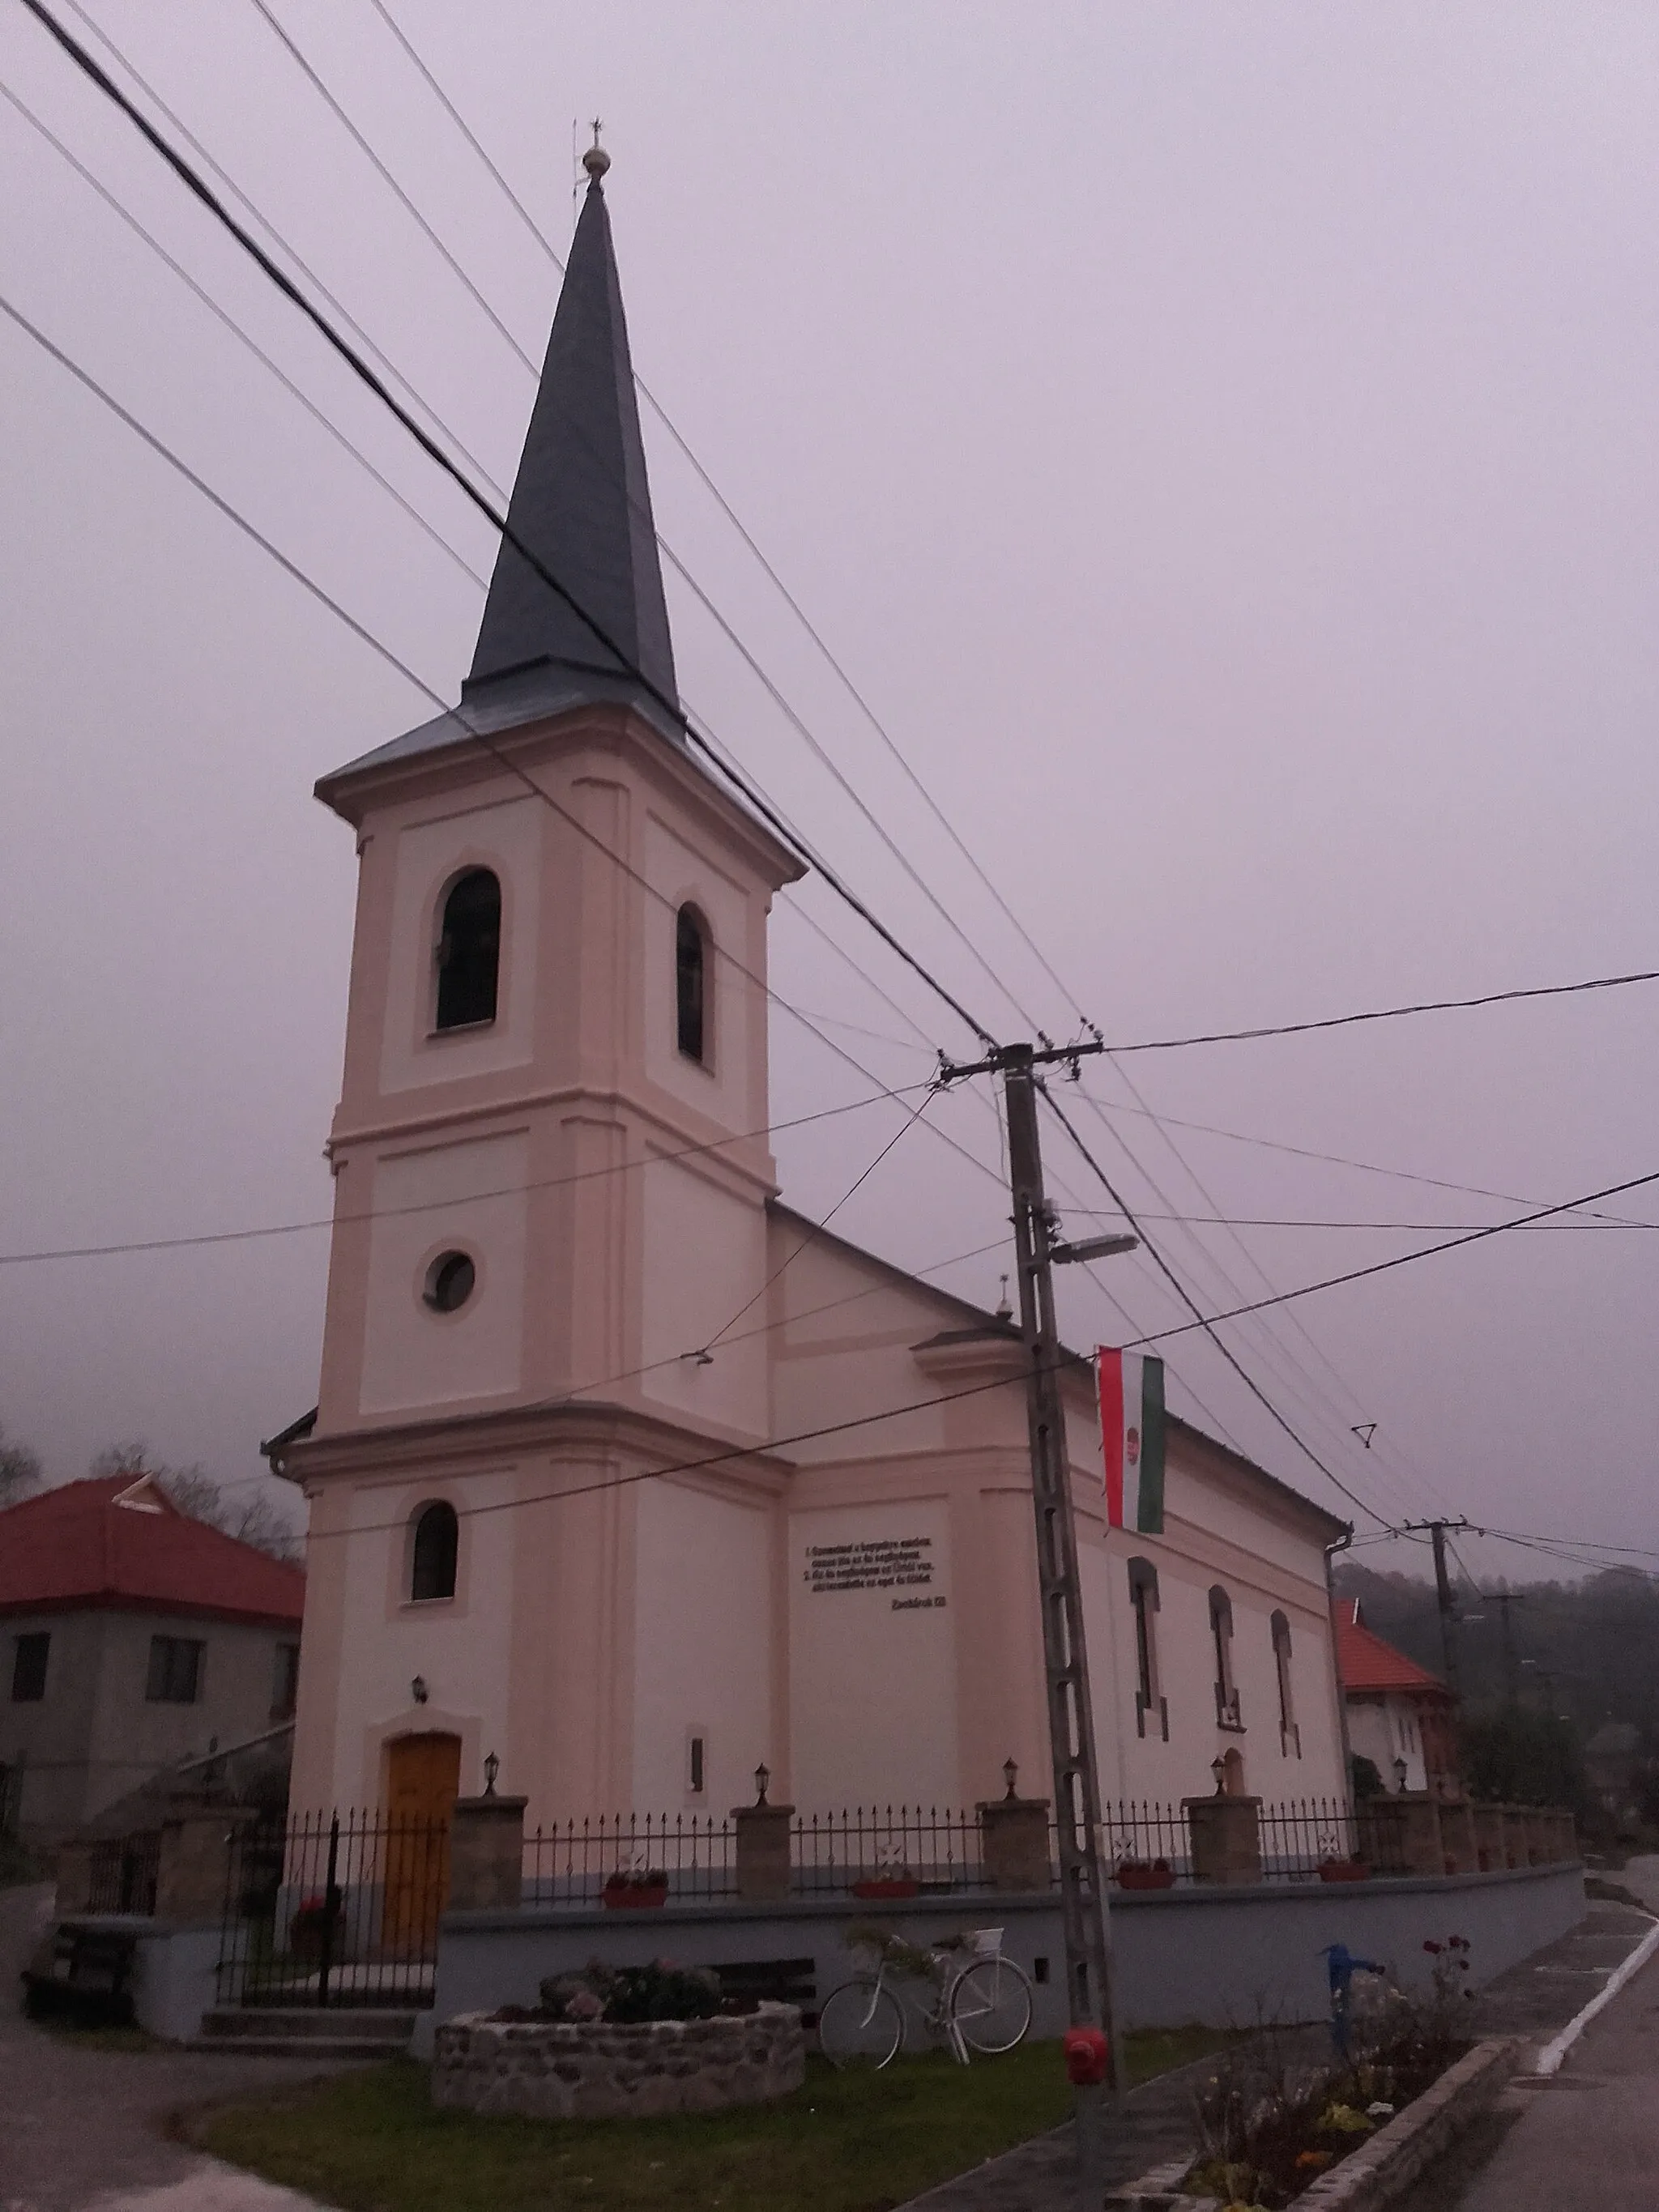 Photo showing: The Reformed church of Pusztafalu, Hungary